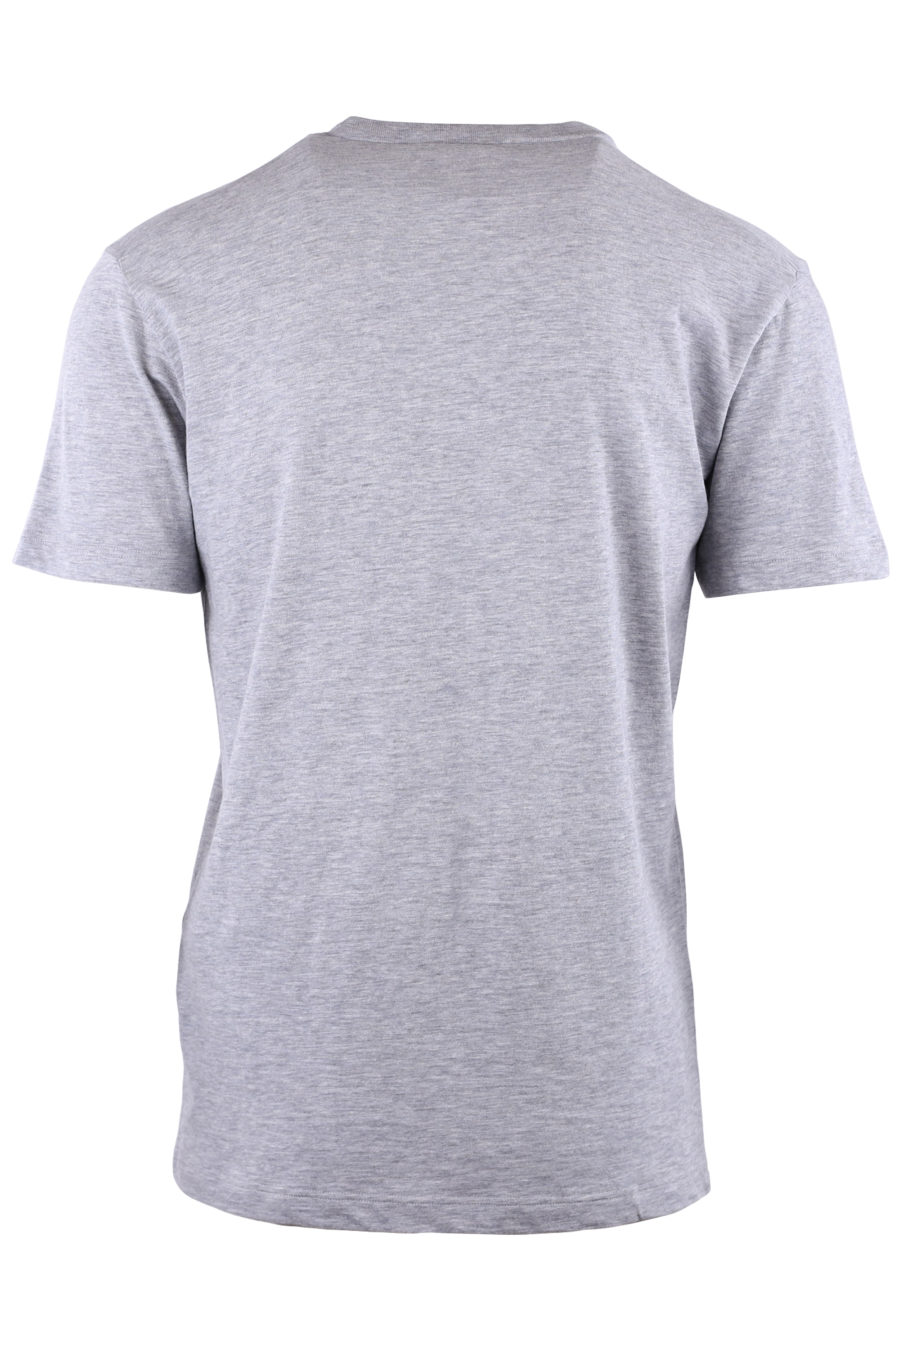 Grey T-shirt with logo and dog print - a19b94ffe678274b754f9f7f7b335272d61f963c12